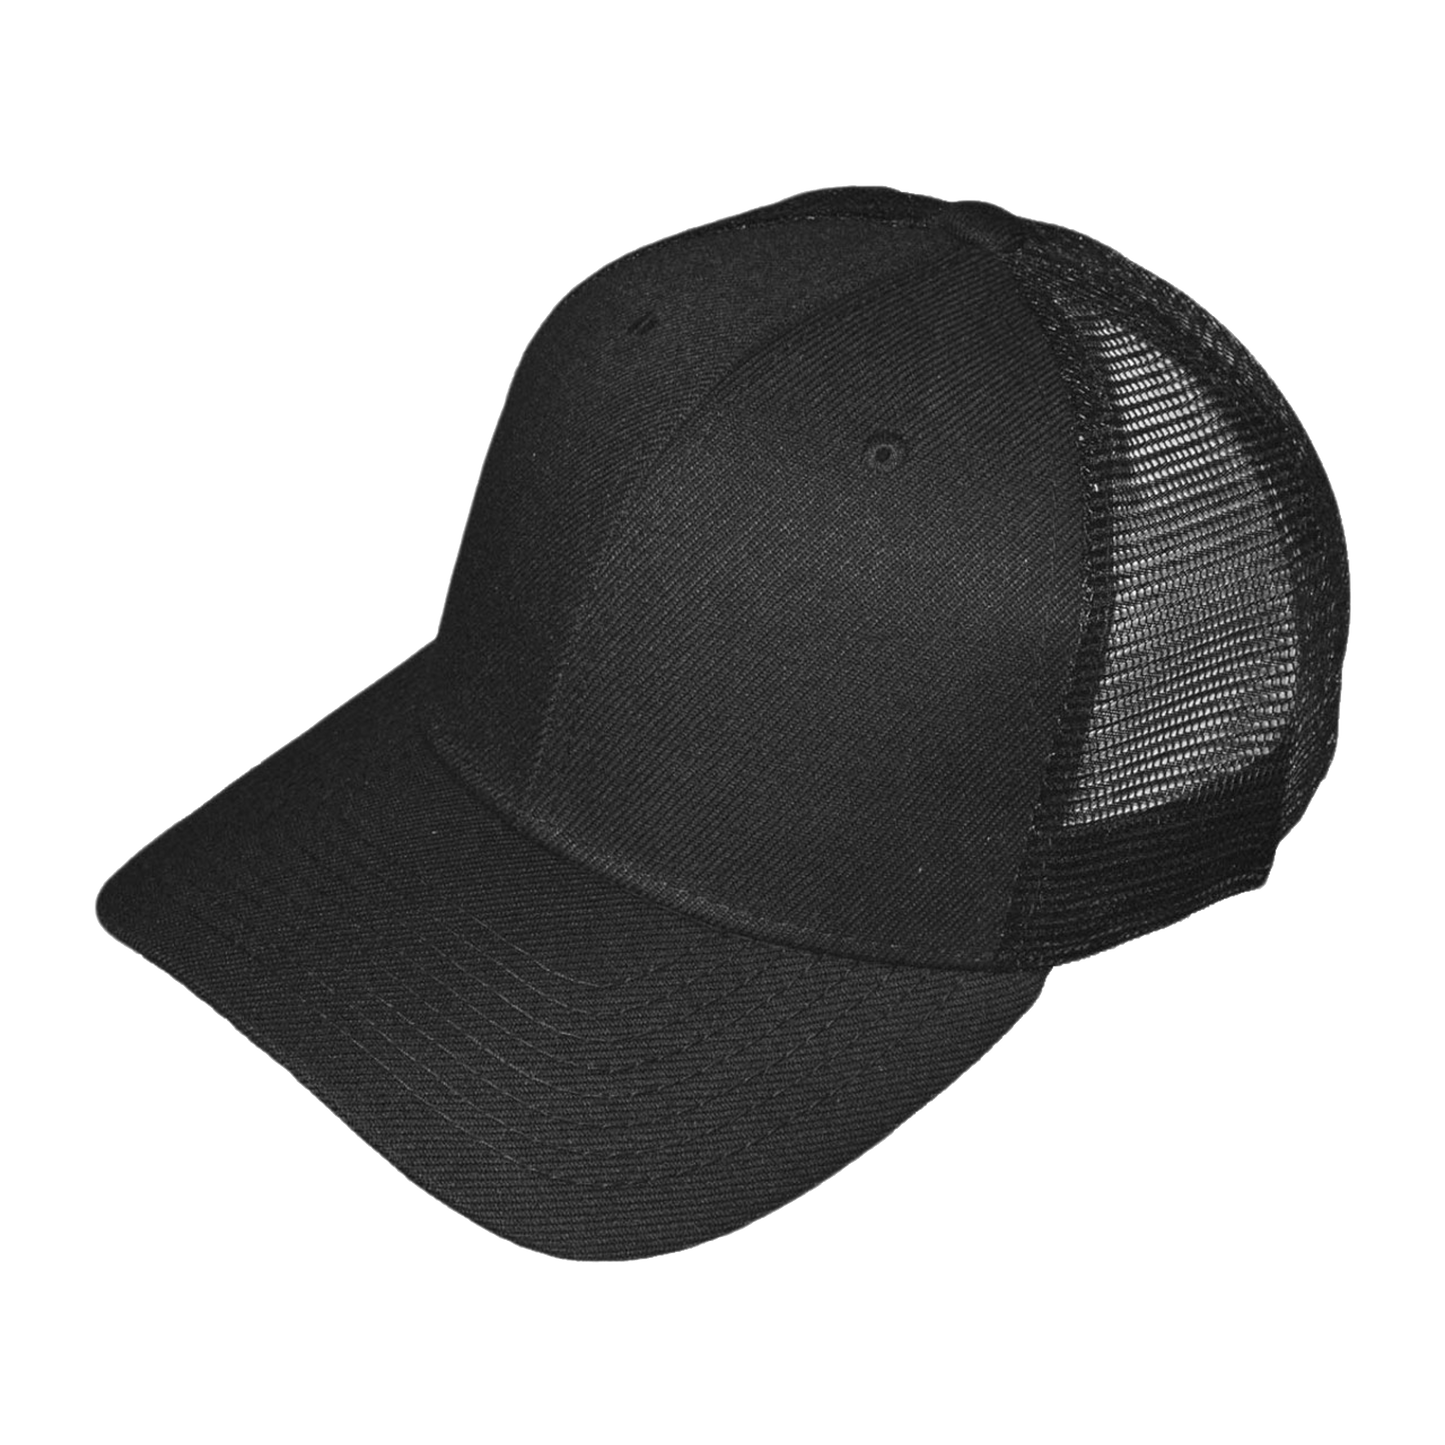 BLANK TRUCKER HATS - STRUCTURED MESH BK CAPS (COMPARE TO RICHARDSON TRUCKER HATS 112)